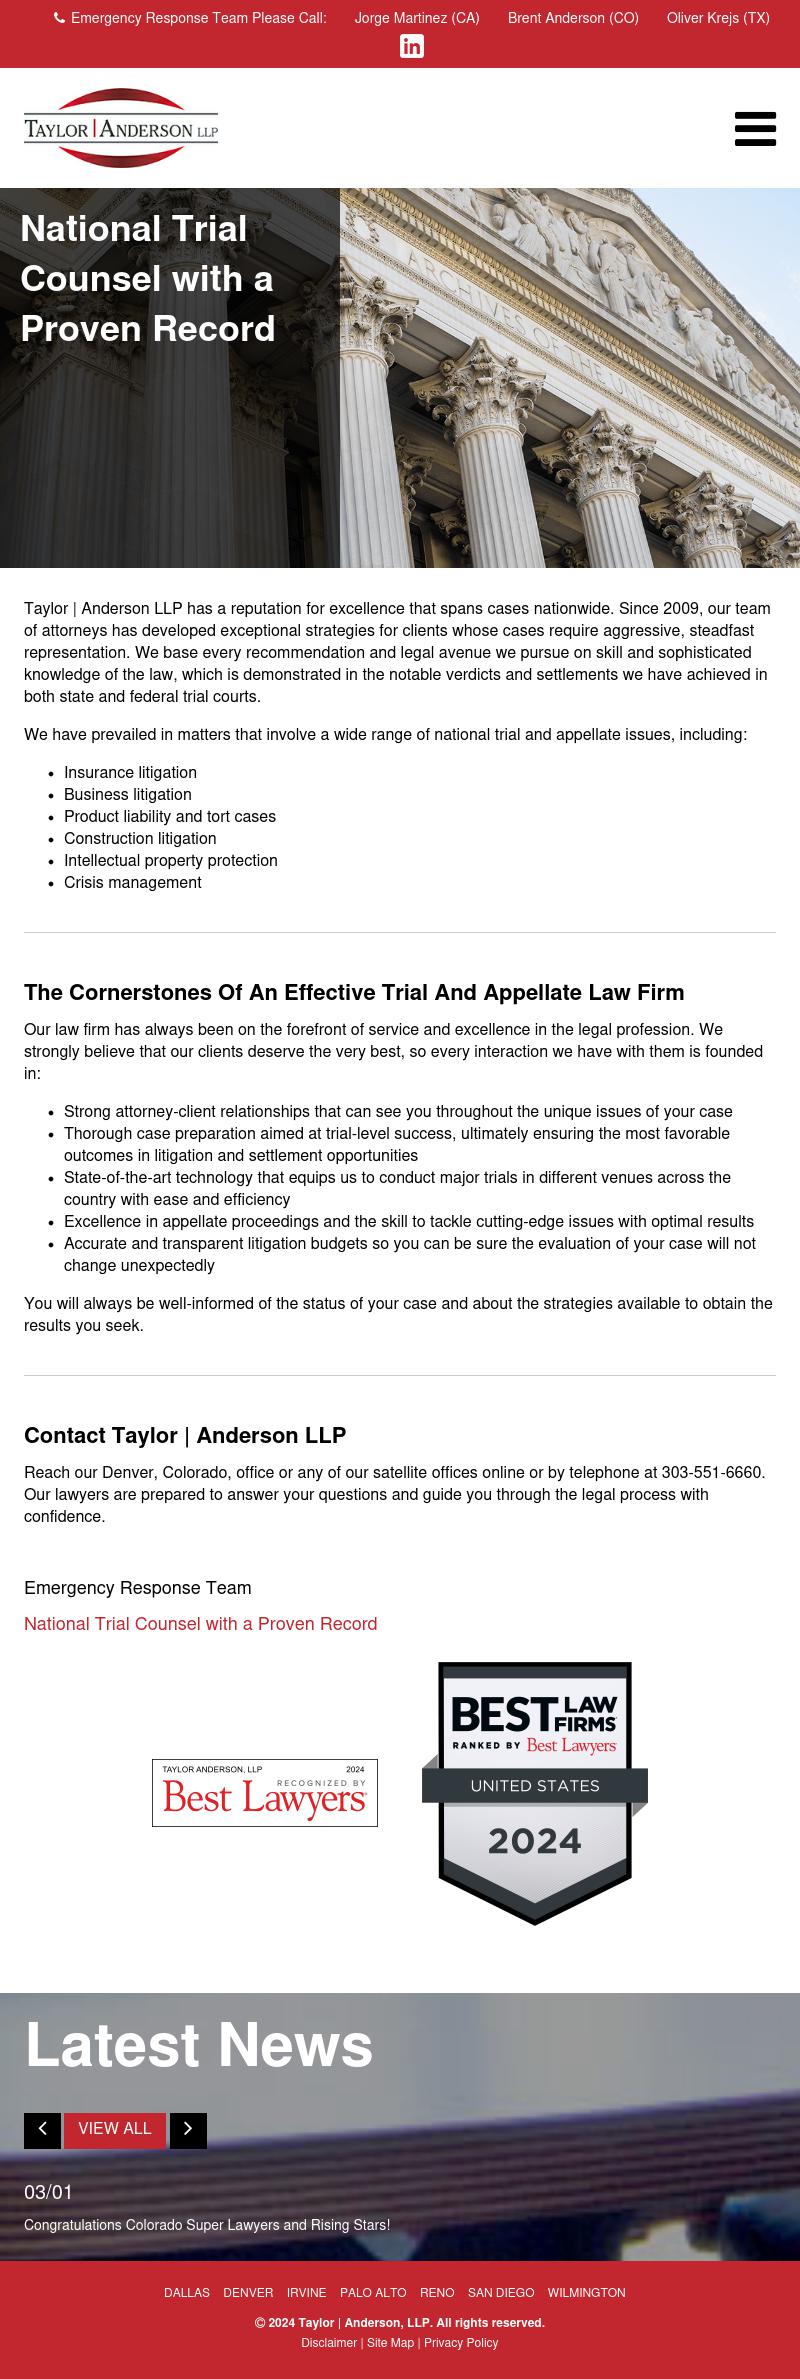 Taylor | Anderson, LLP - Sacramento CA Lawyers